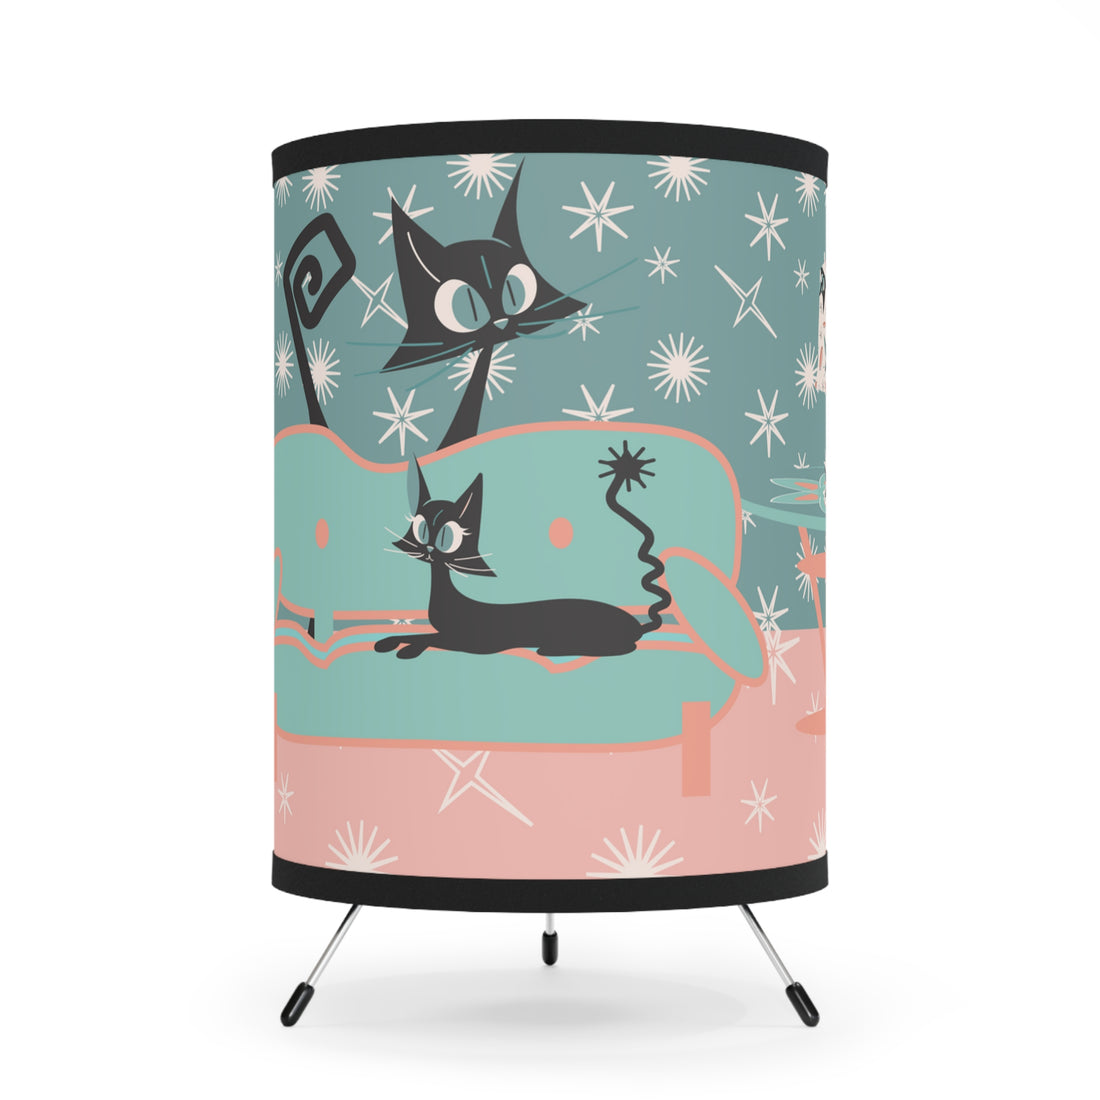 Atomic Cat Tripod Lamp, Pink, Aqua Starbursts, Mid Century Modern Kitschy Cats, Fun Side Table Lamp